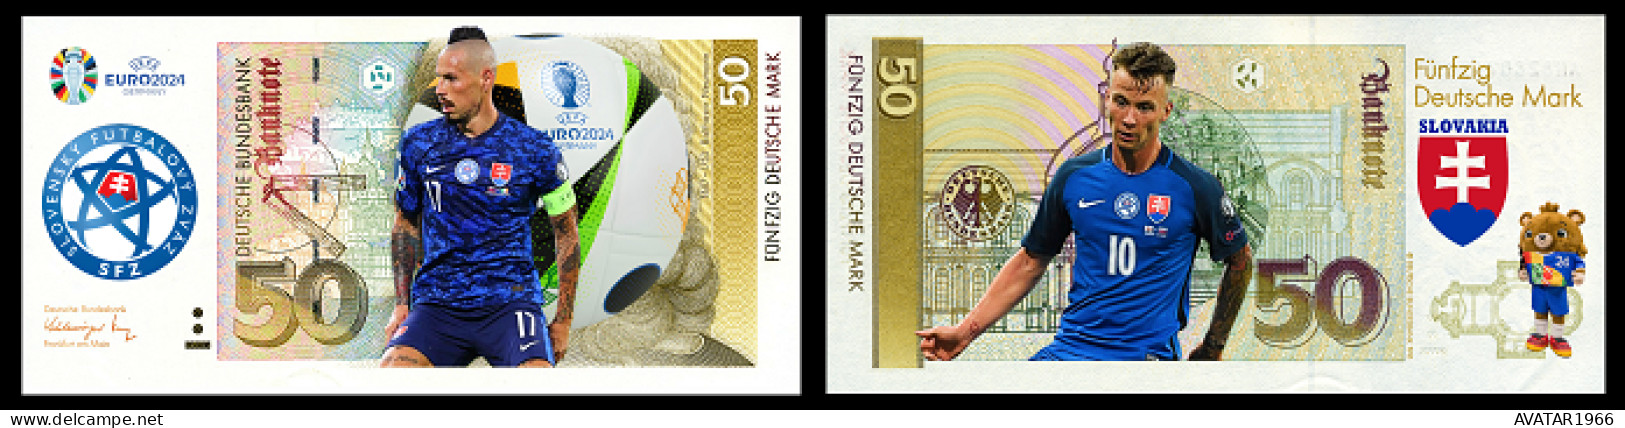 UEFA European Football Championship 2024 Qualified Country Slovakia  8 Pieces Germany Fantasy Paper Money - Gedenkausgaben